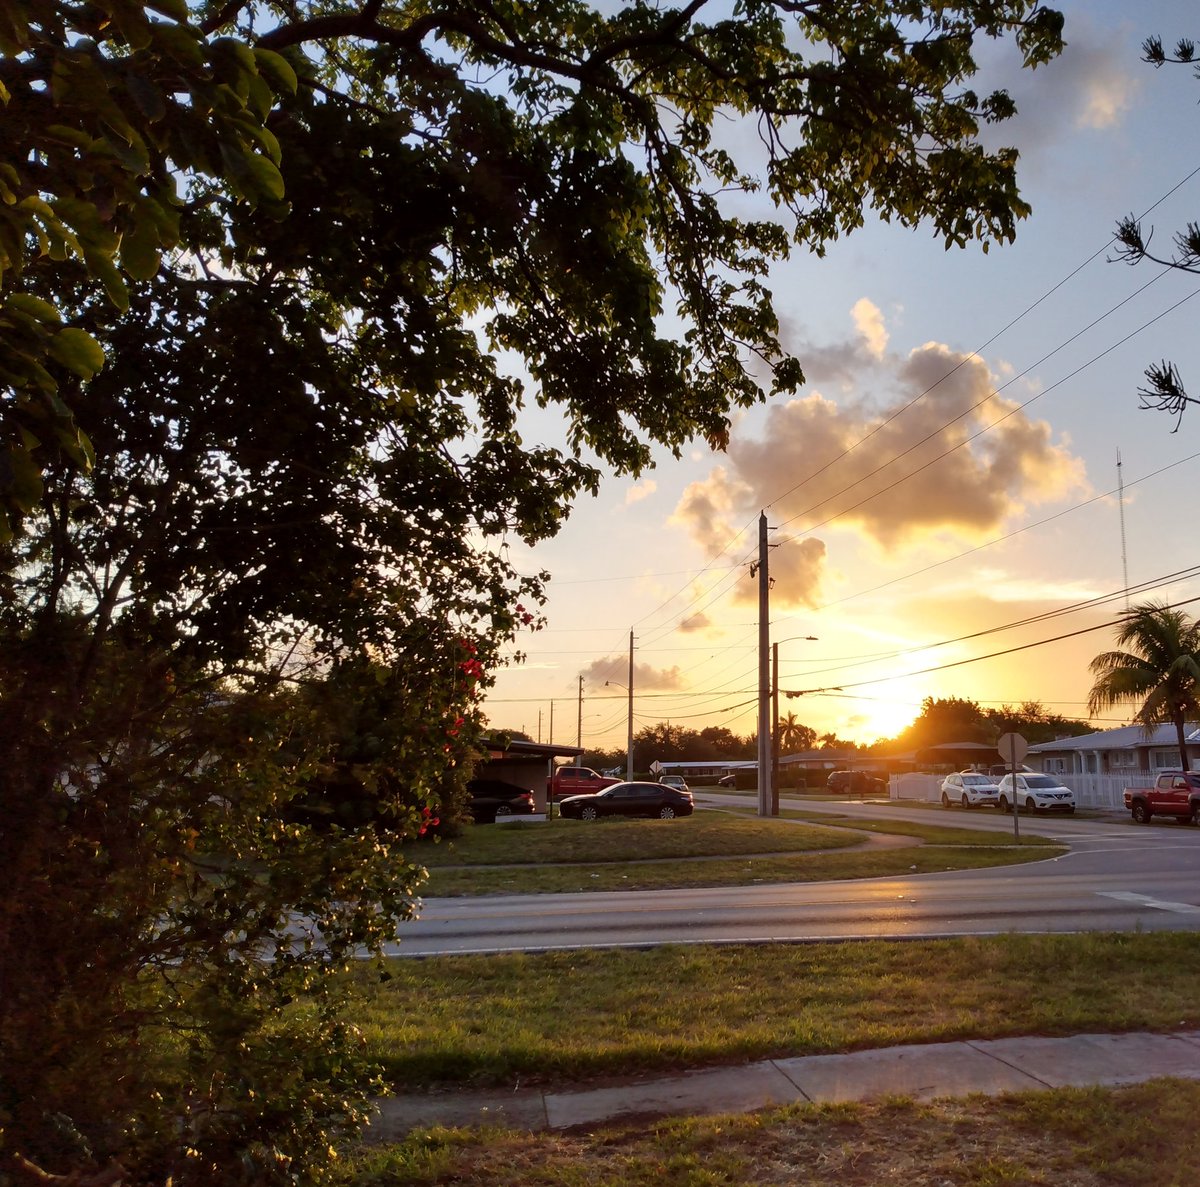 @JorgeG179 #Miami #Sky #Sunset  #Palmtrees #photo #photodaily #phototoday #photooftheday #photograph #photographer #photography #photooftheweek #photos #photosession #photostudio #skyphotography #sunrays #sunflares #lensflare #SunsetEvening